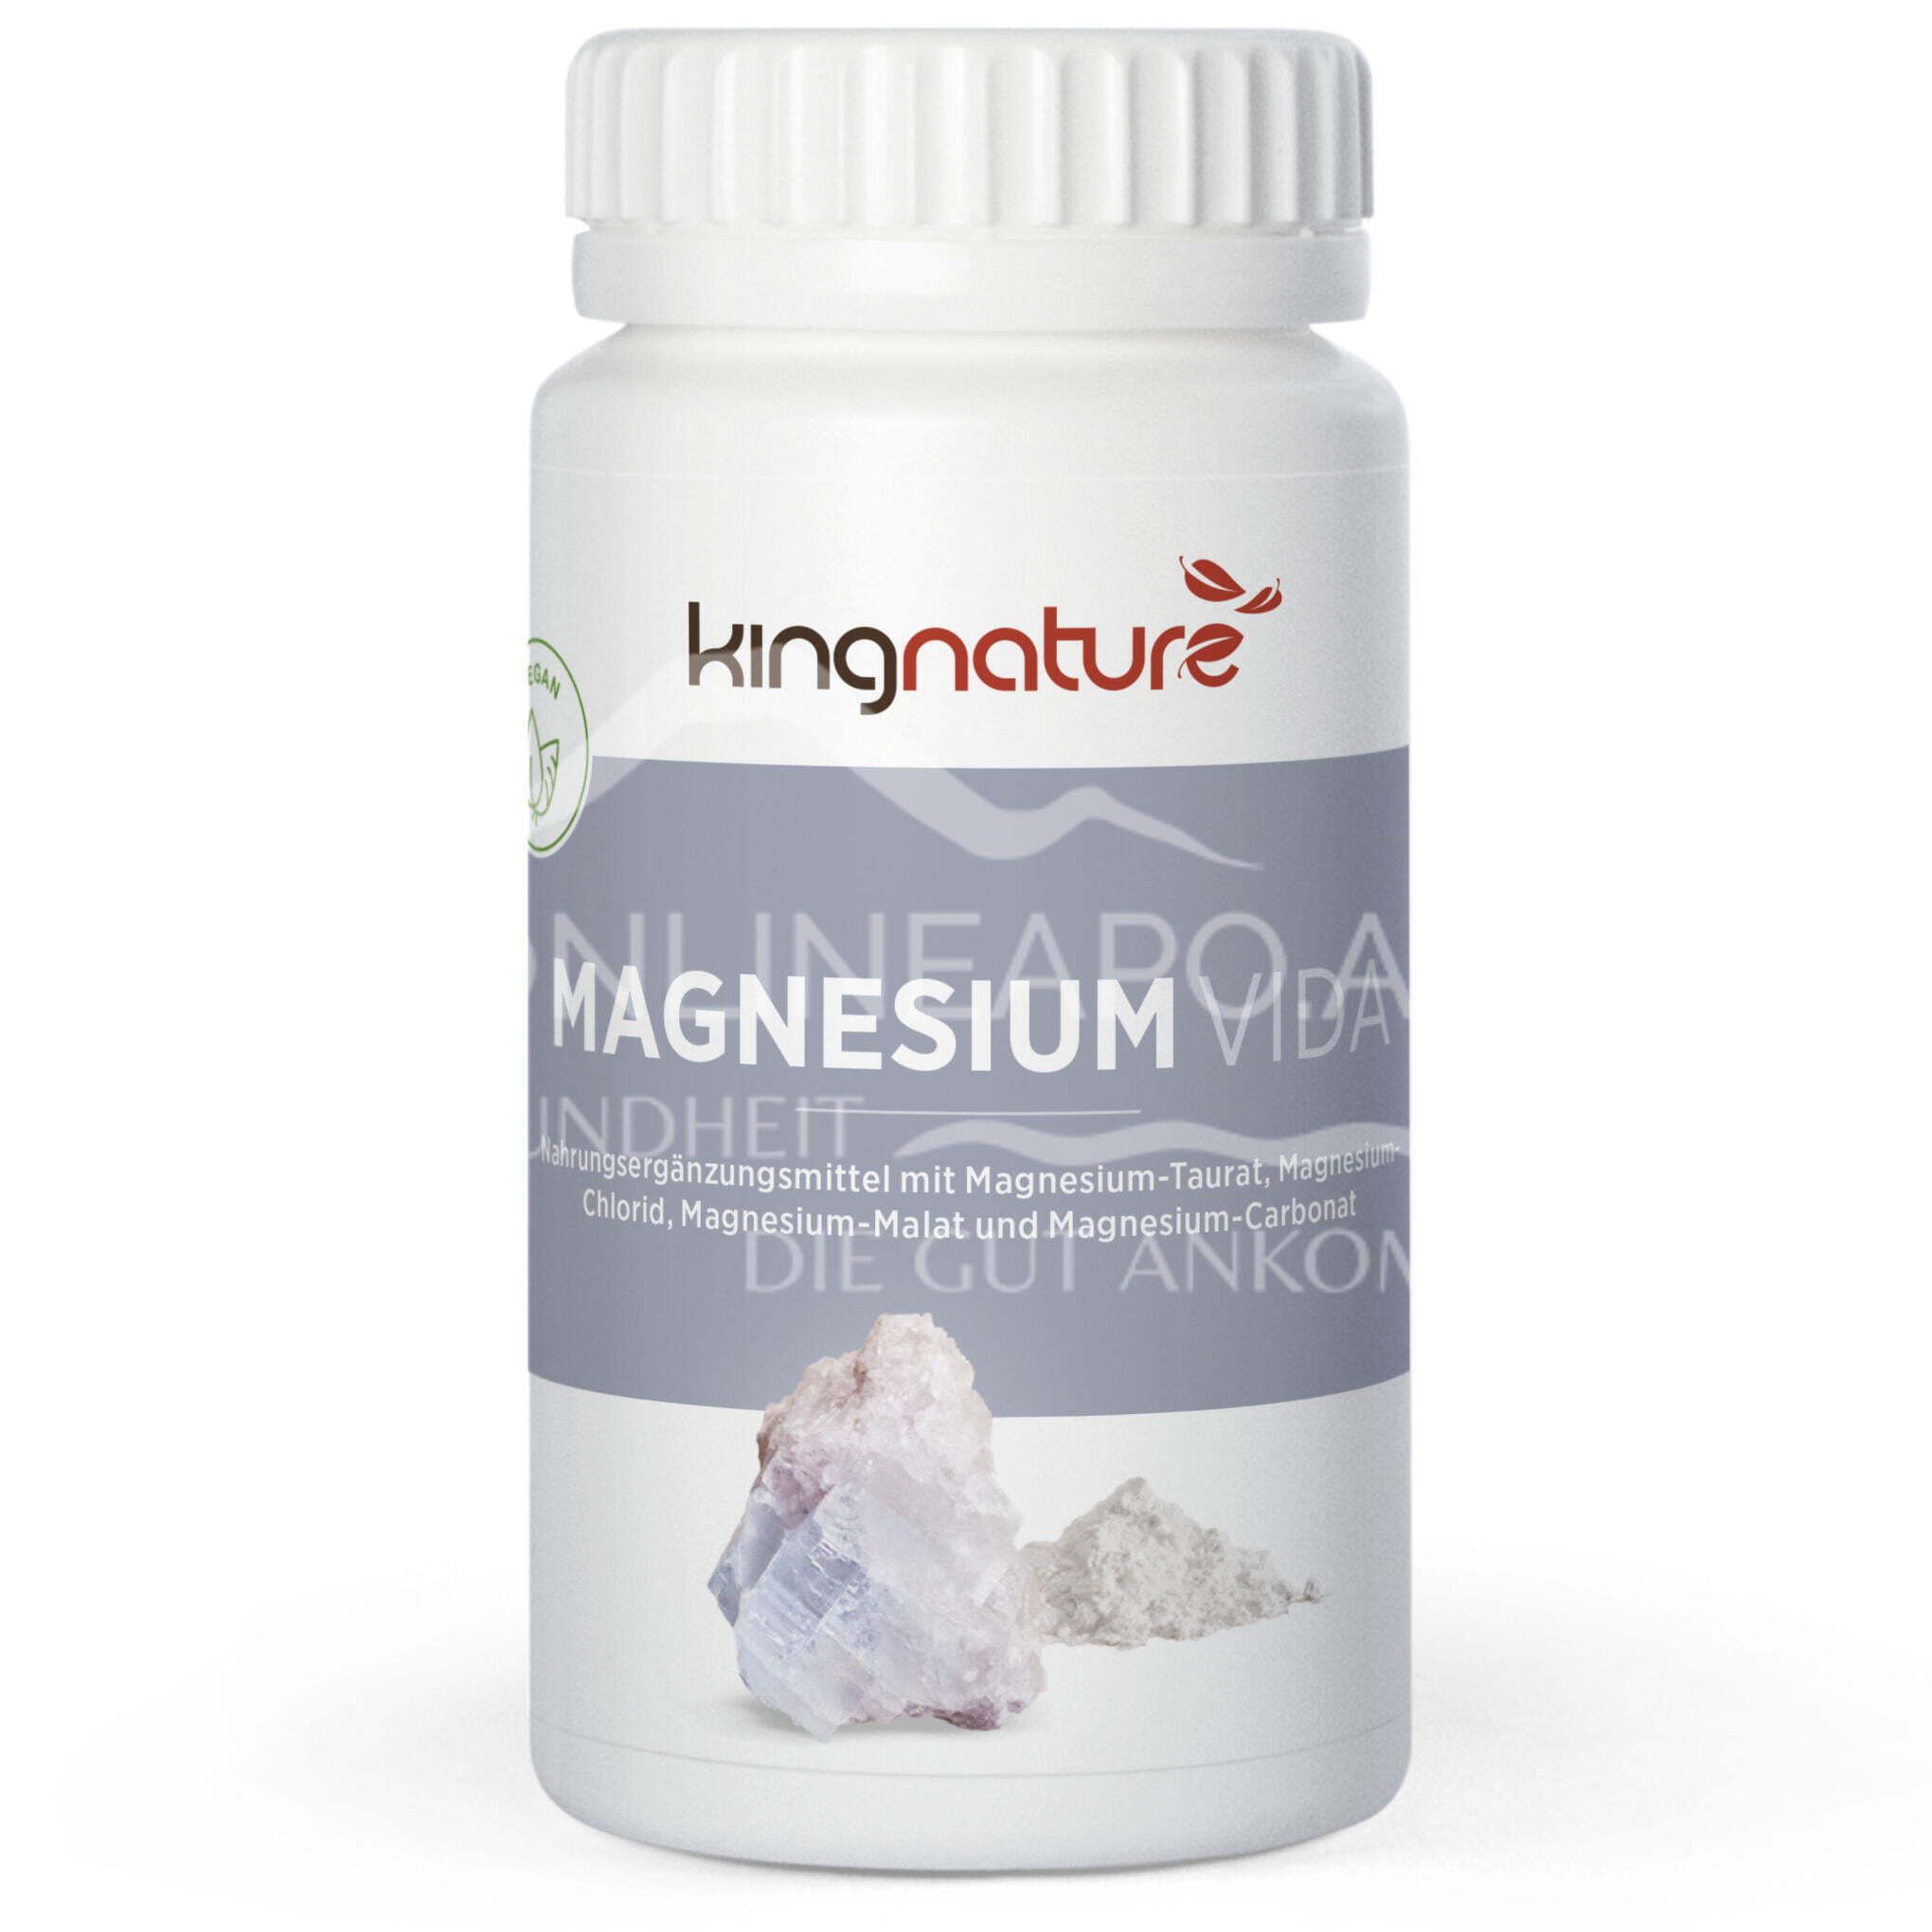 Kingnature Magnesium Vida Kapseln